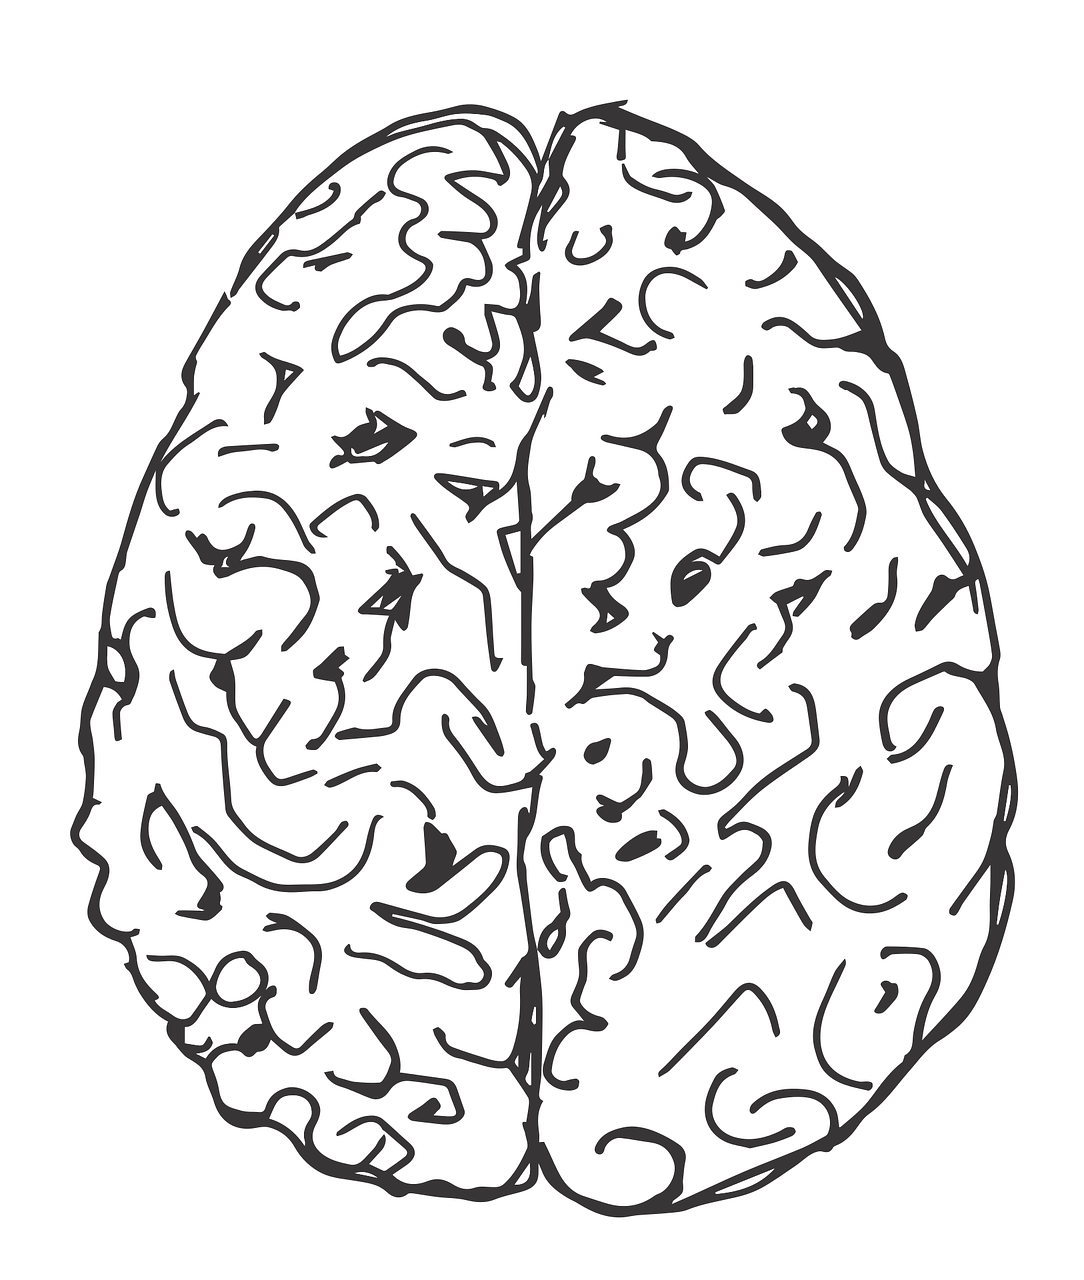 Me and my brain. Два полушария головного мозга. Мозг нарисованный. Мозг рисунок.